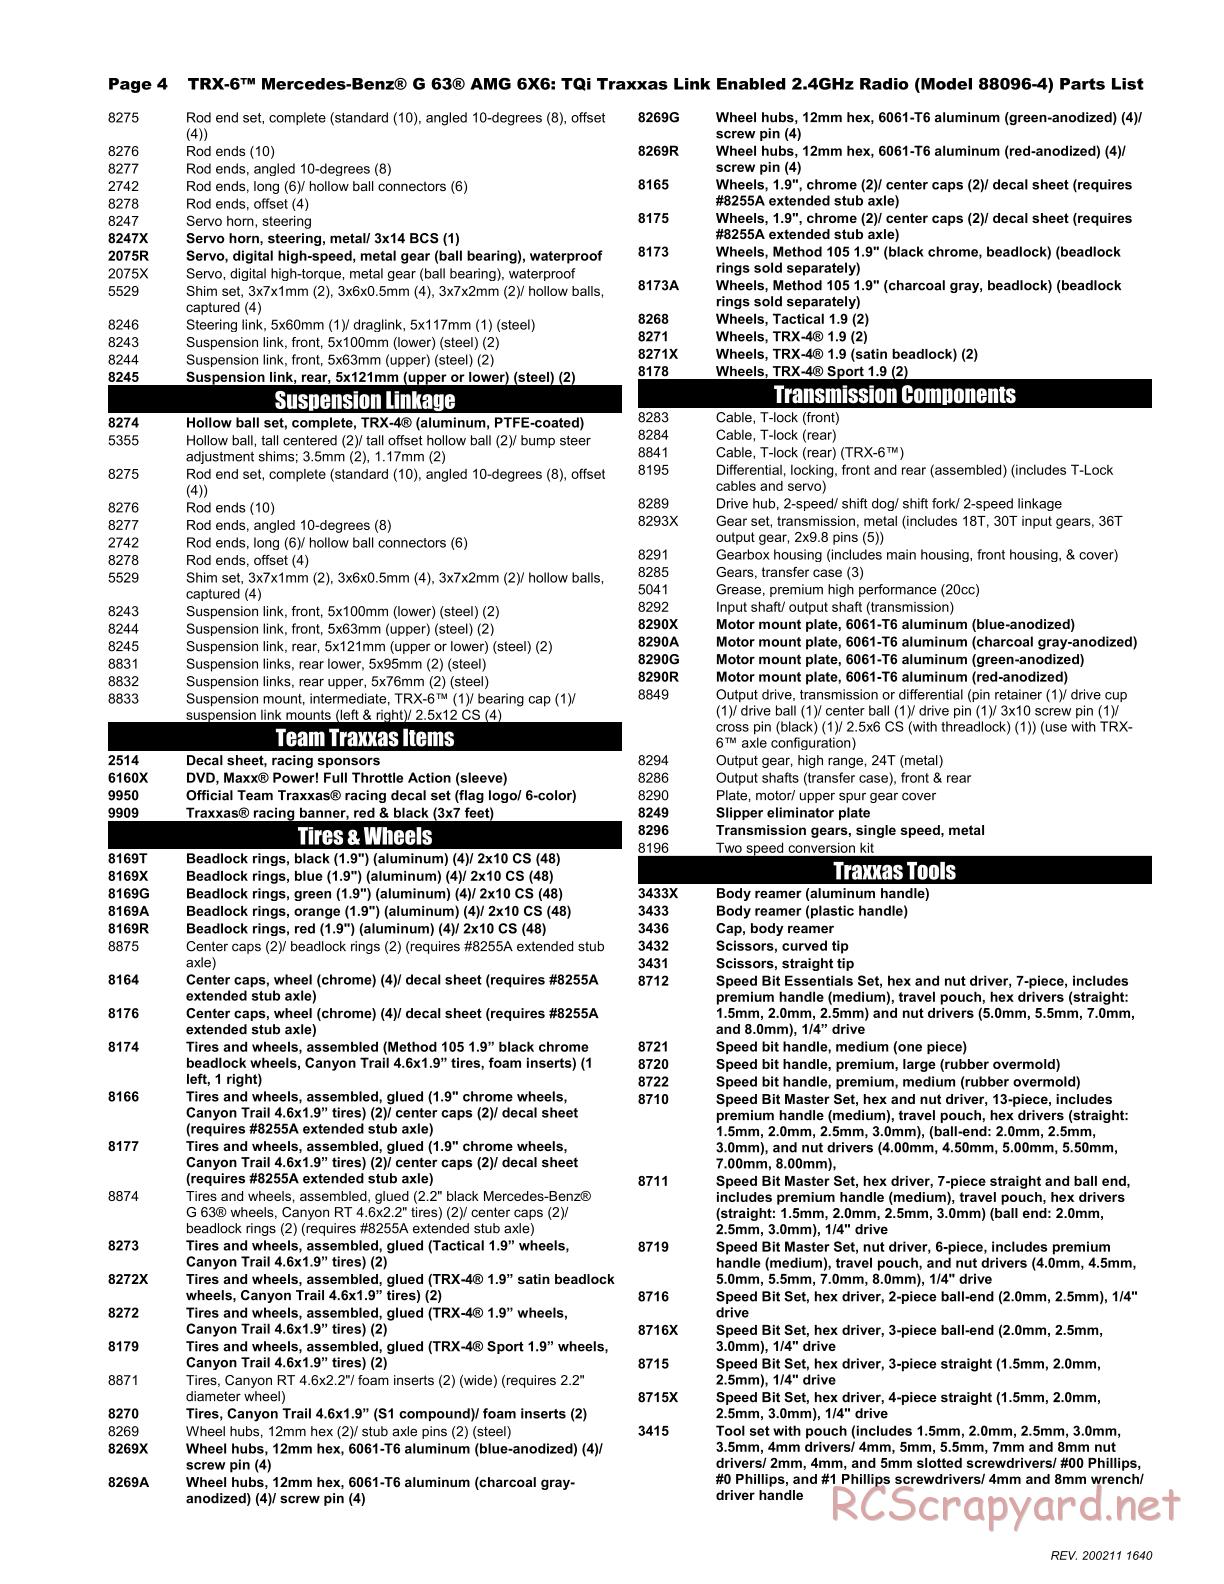 Traxxas - TRX-6 Mercedes-Benz G 63 AMG 6x6 - Parts List - Page 4